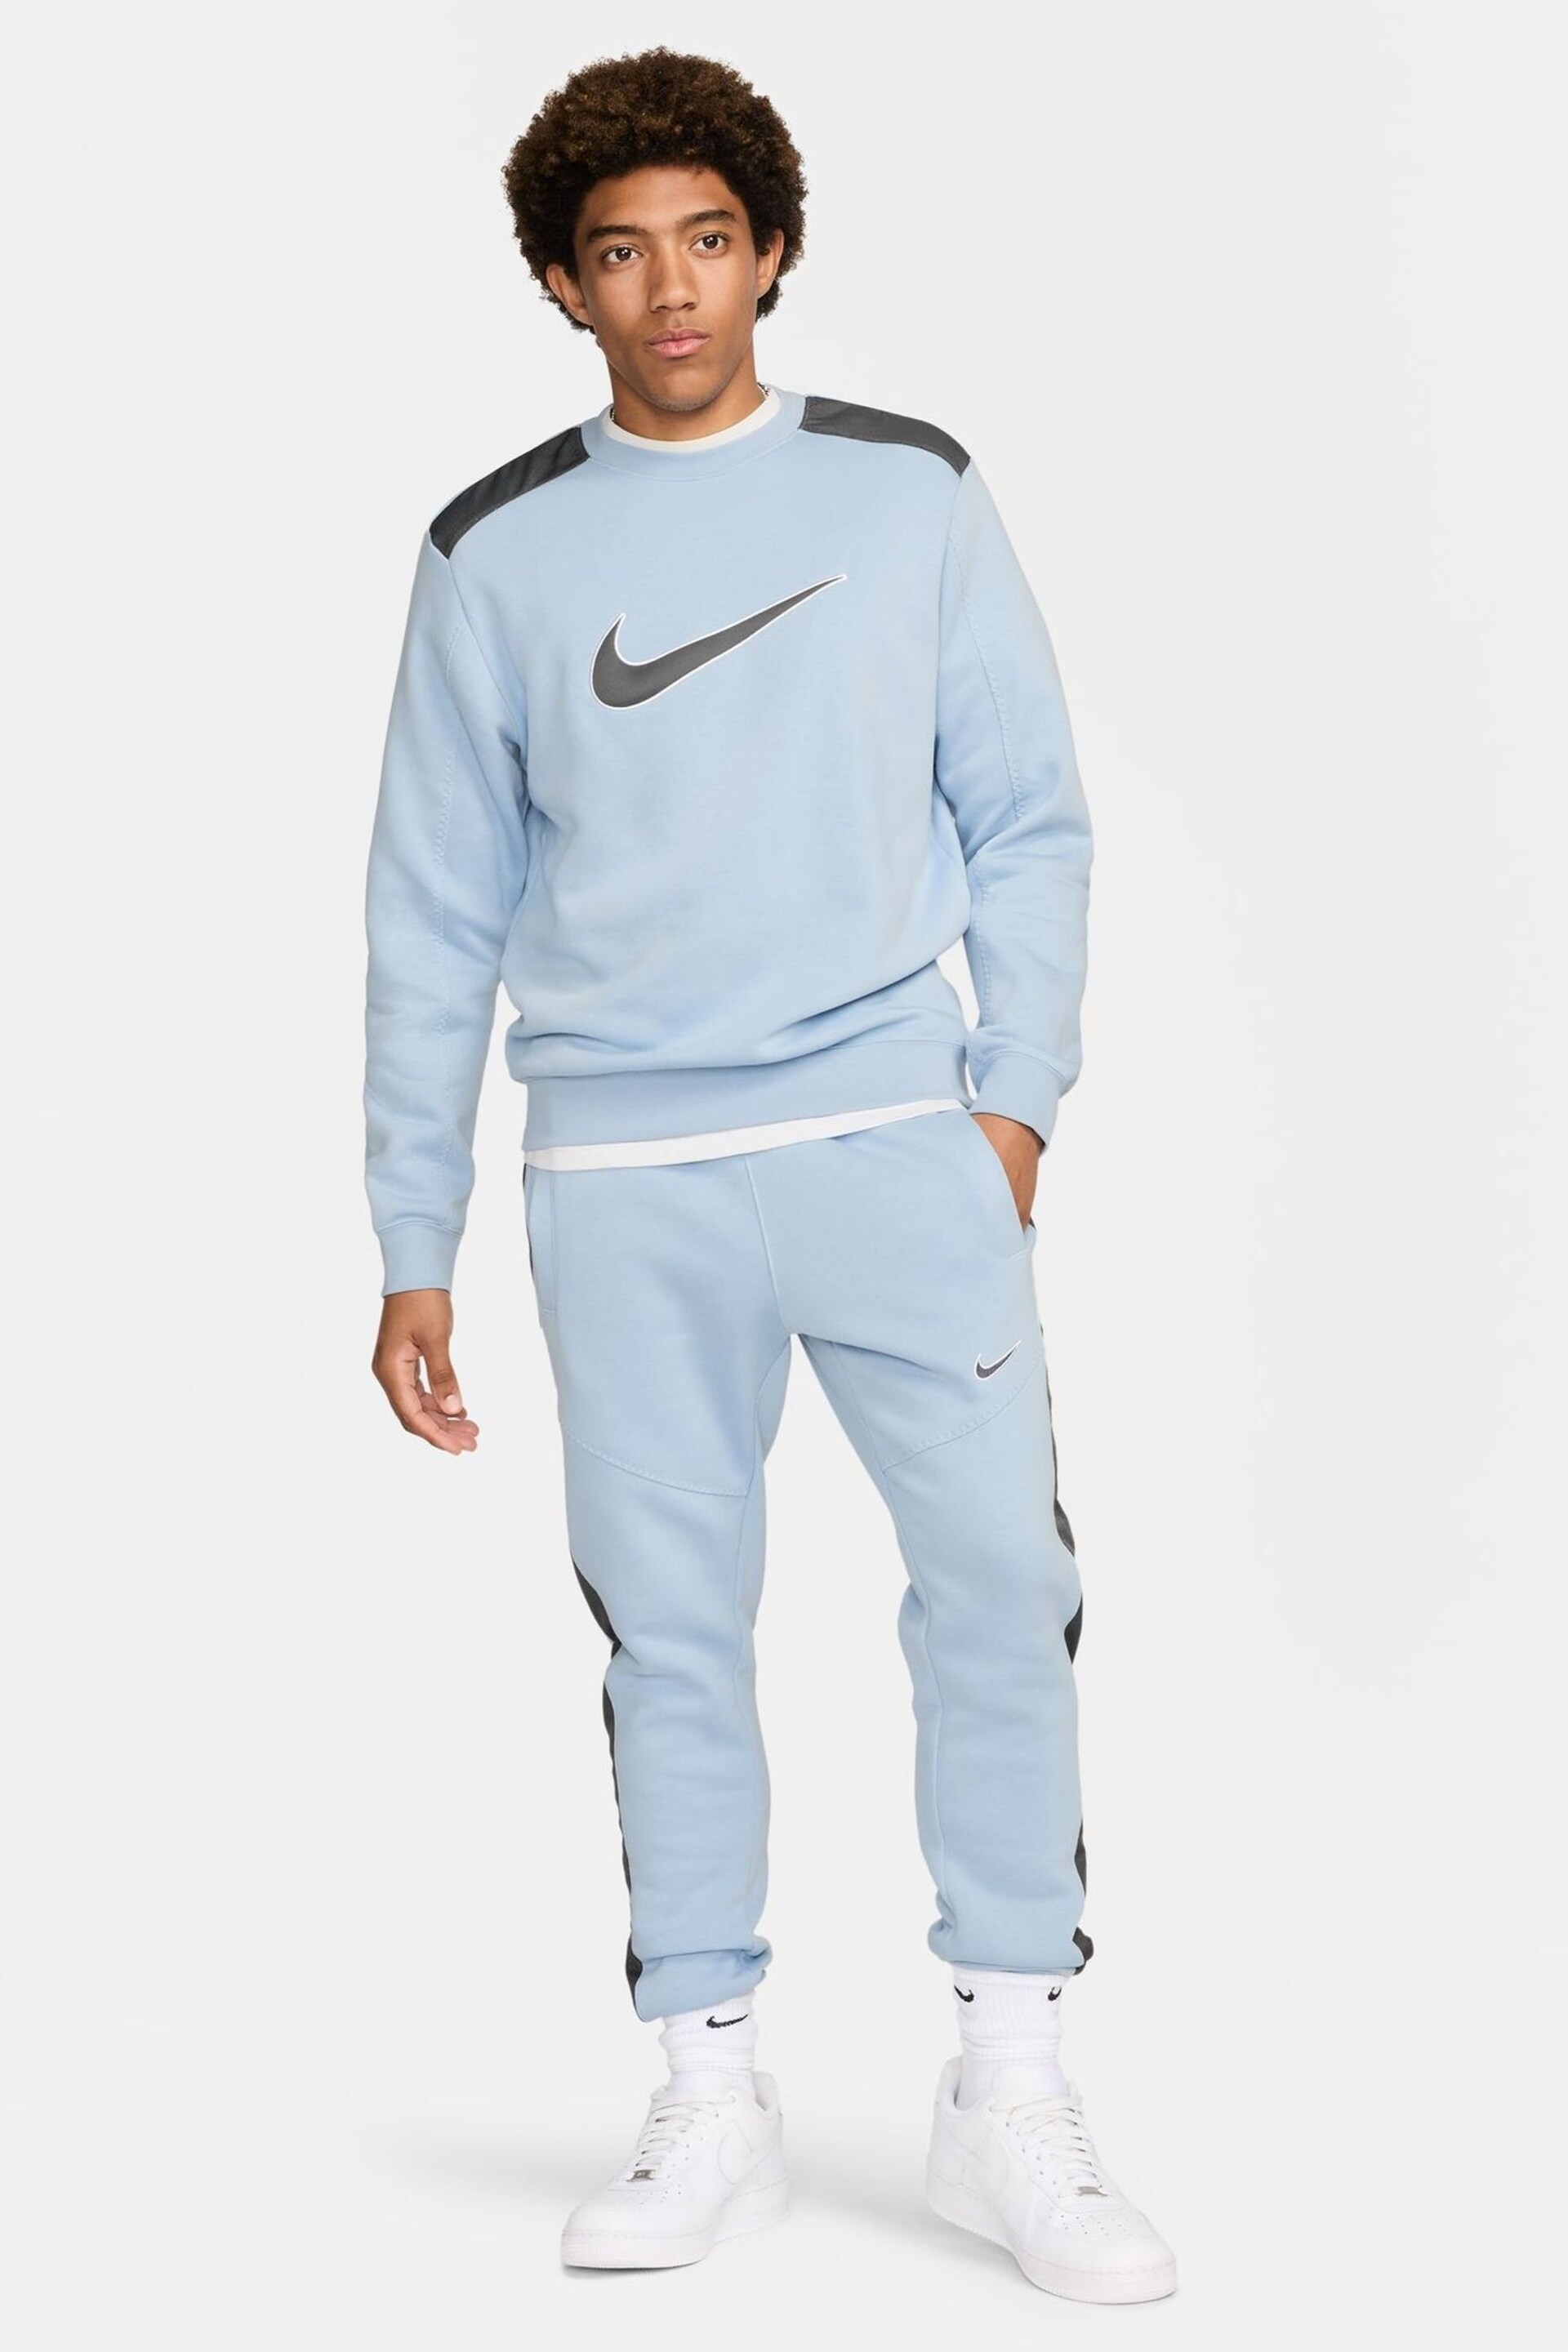 Nike Blue Sportswear Colourblock Crew Sweatshirt - Image 6 of 6